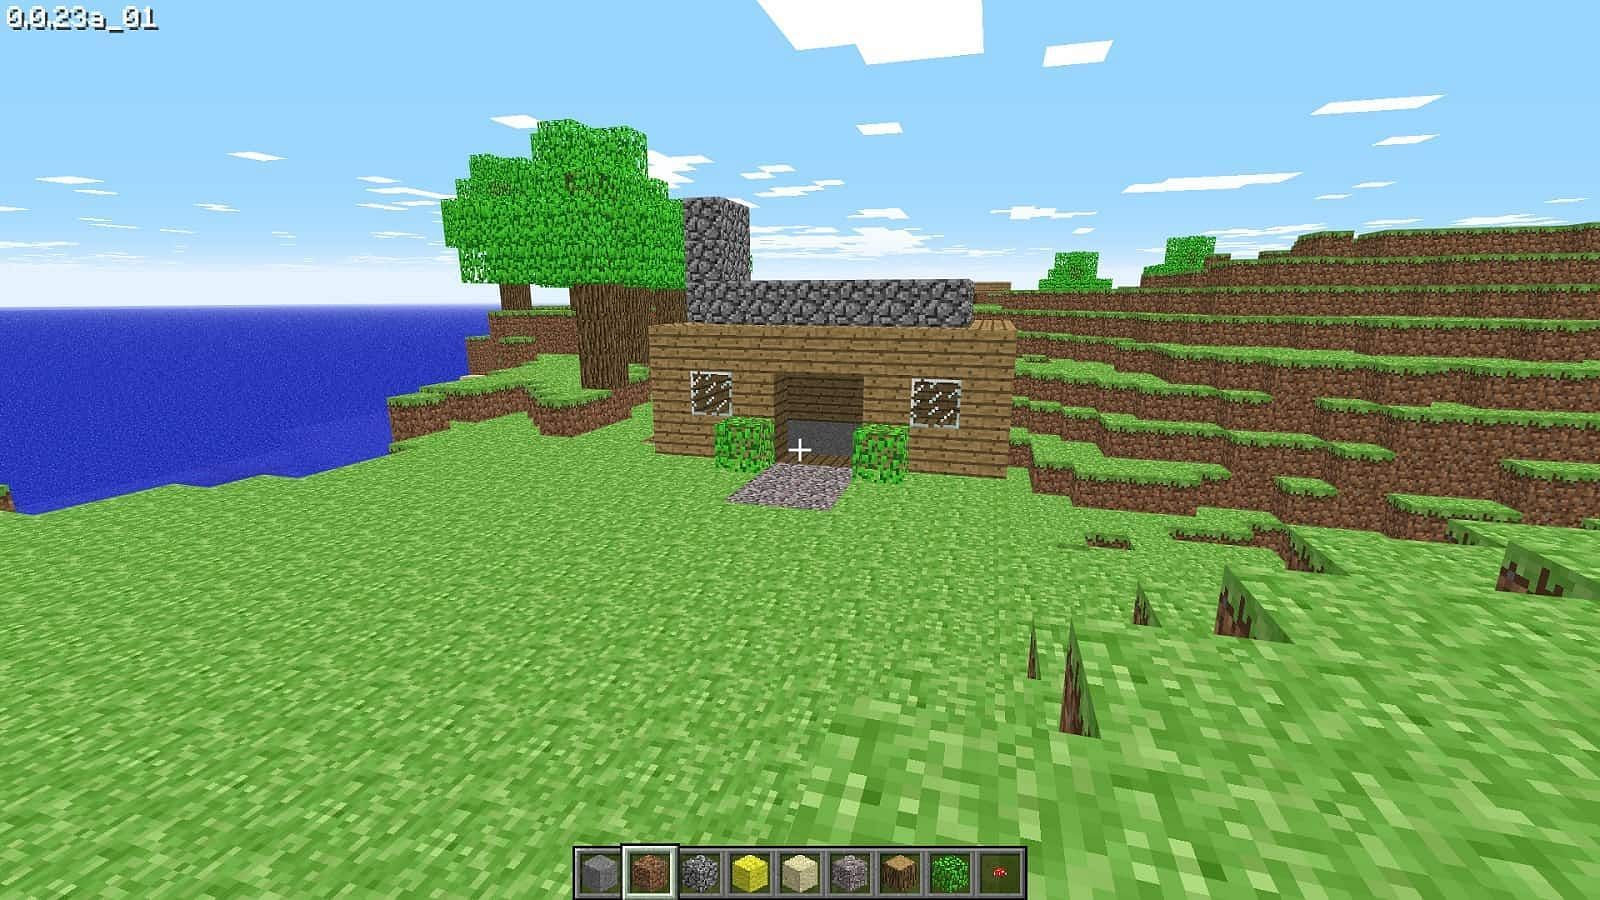 Blocks in Minecraft (Image via KnowTechie)